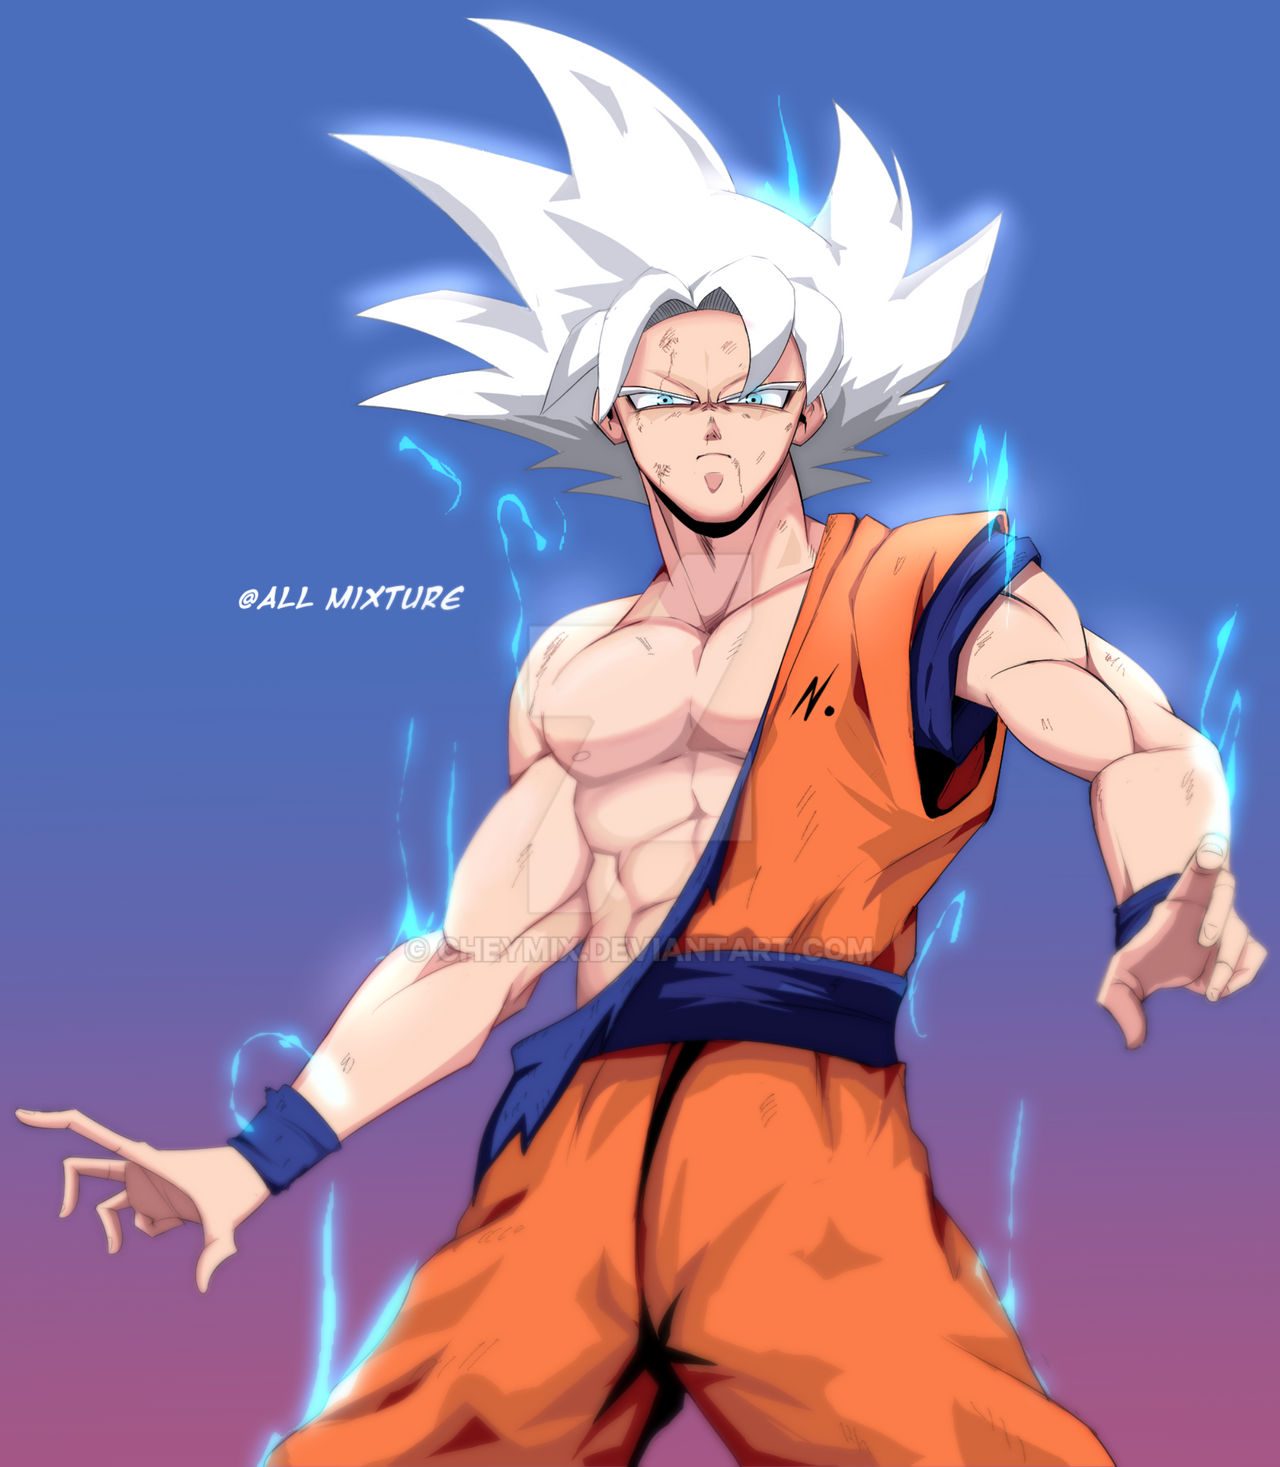 ultra instinct Goku by cheymix on DeviantArt